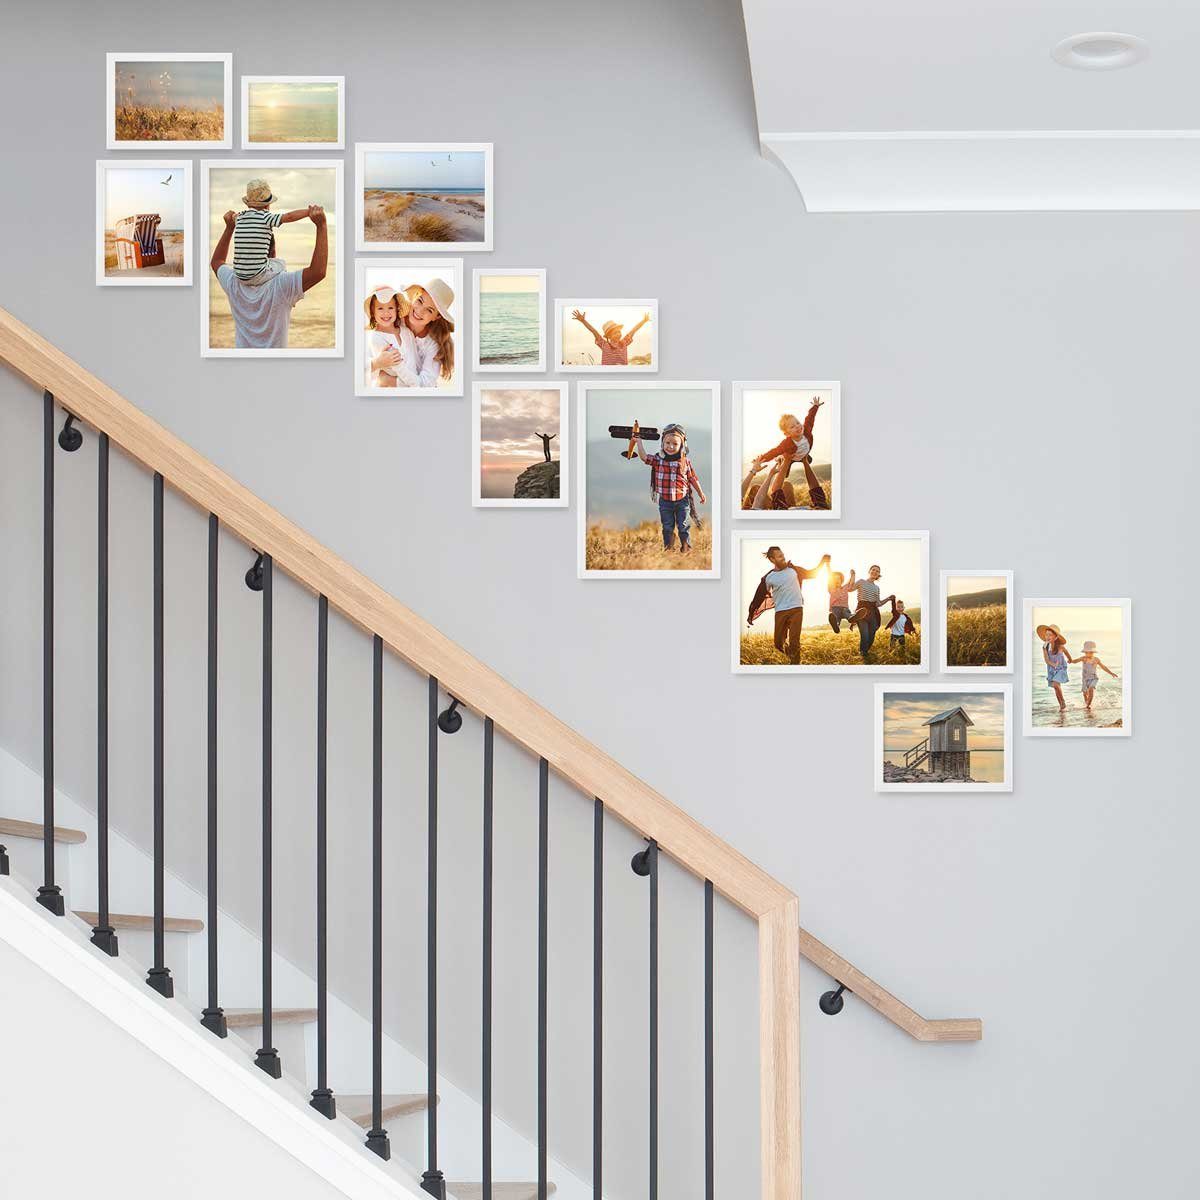 Treppenhaus 15er Weiss Echtholz-Rahmen, PHOTOLINI Acrylglas 21x30 Bilderrahmen 10x15 cm Set bis